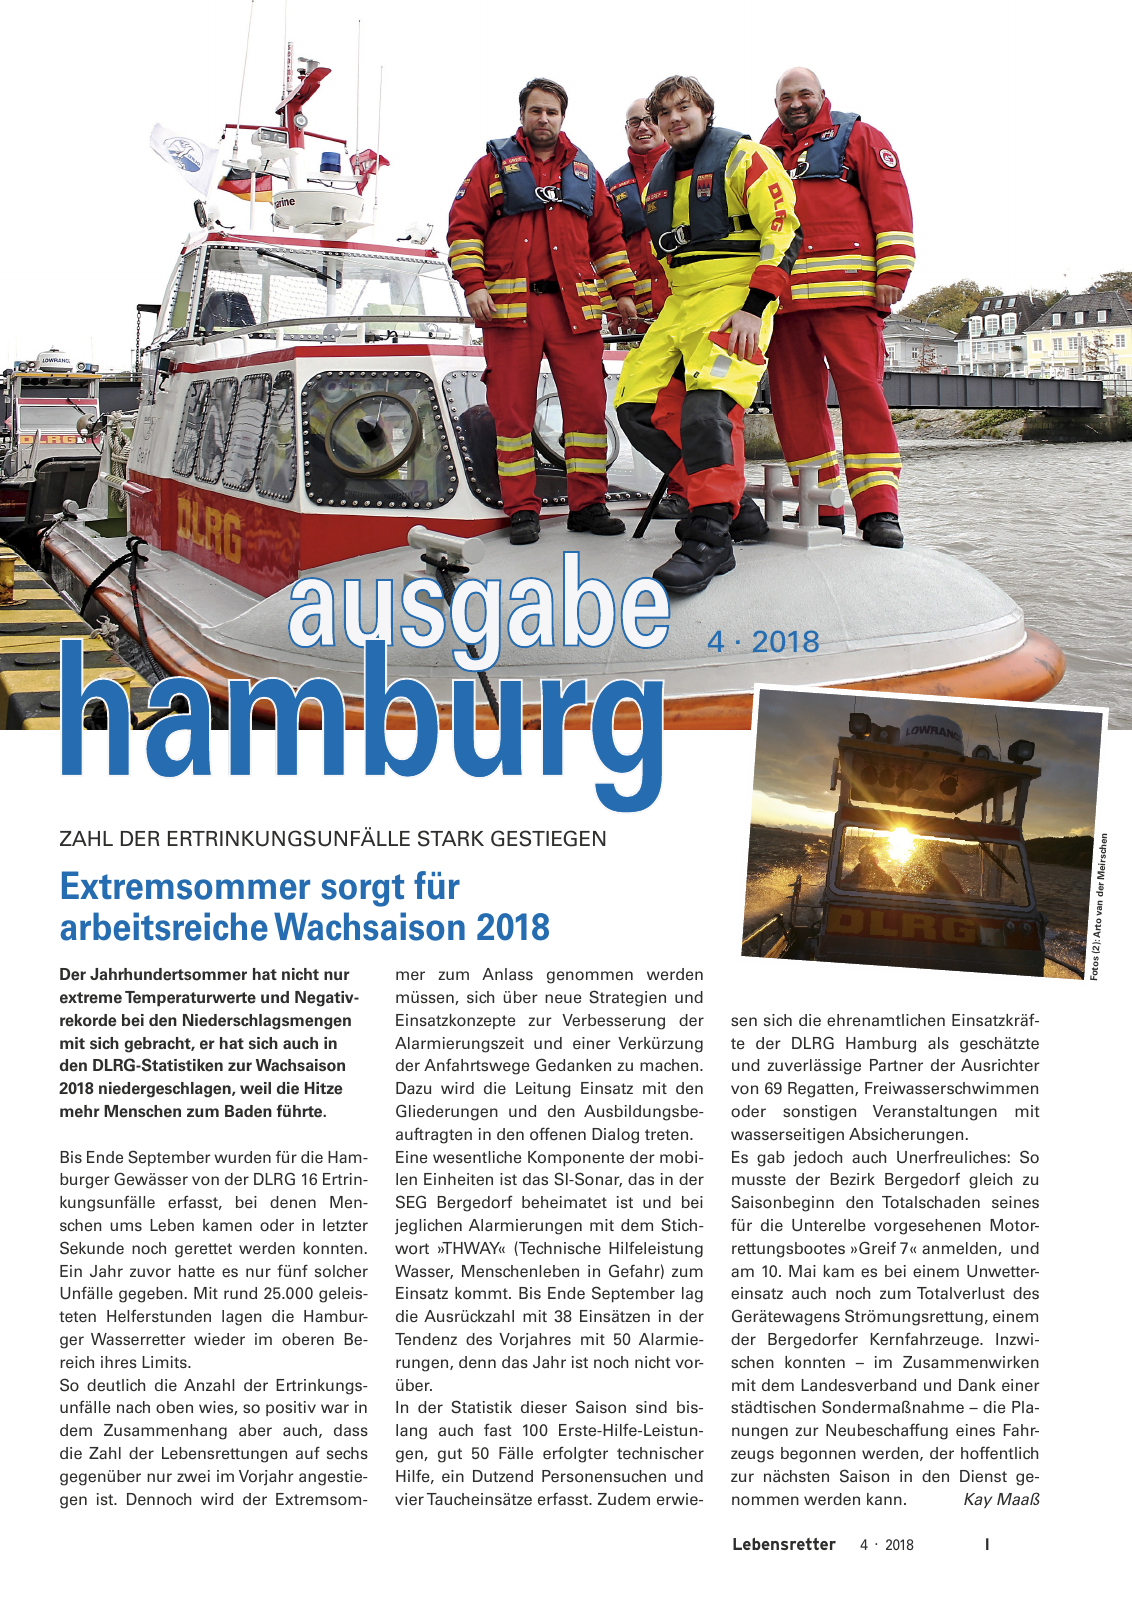 Vorschau Lebensretter 4/2018 - Regionalausgabe Hamburg Seite 3